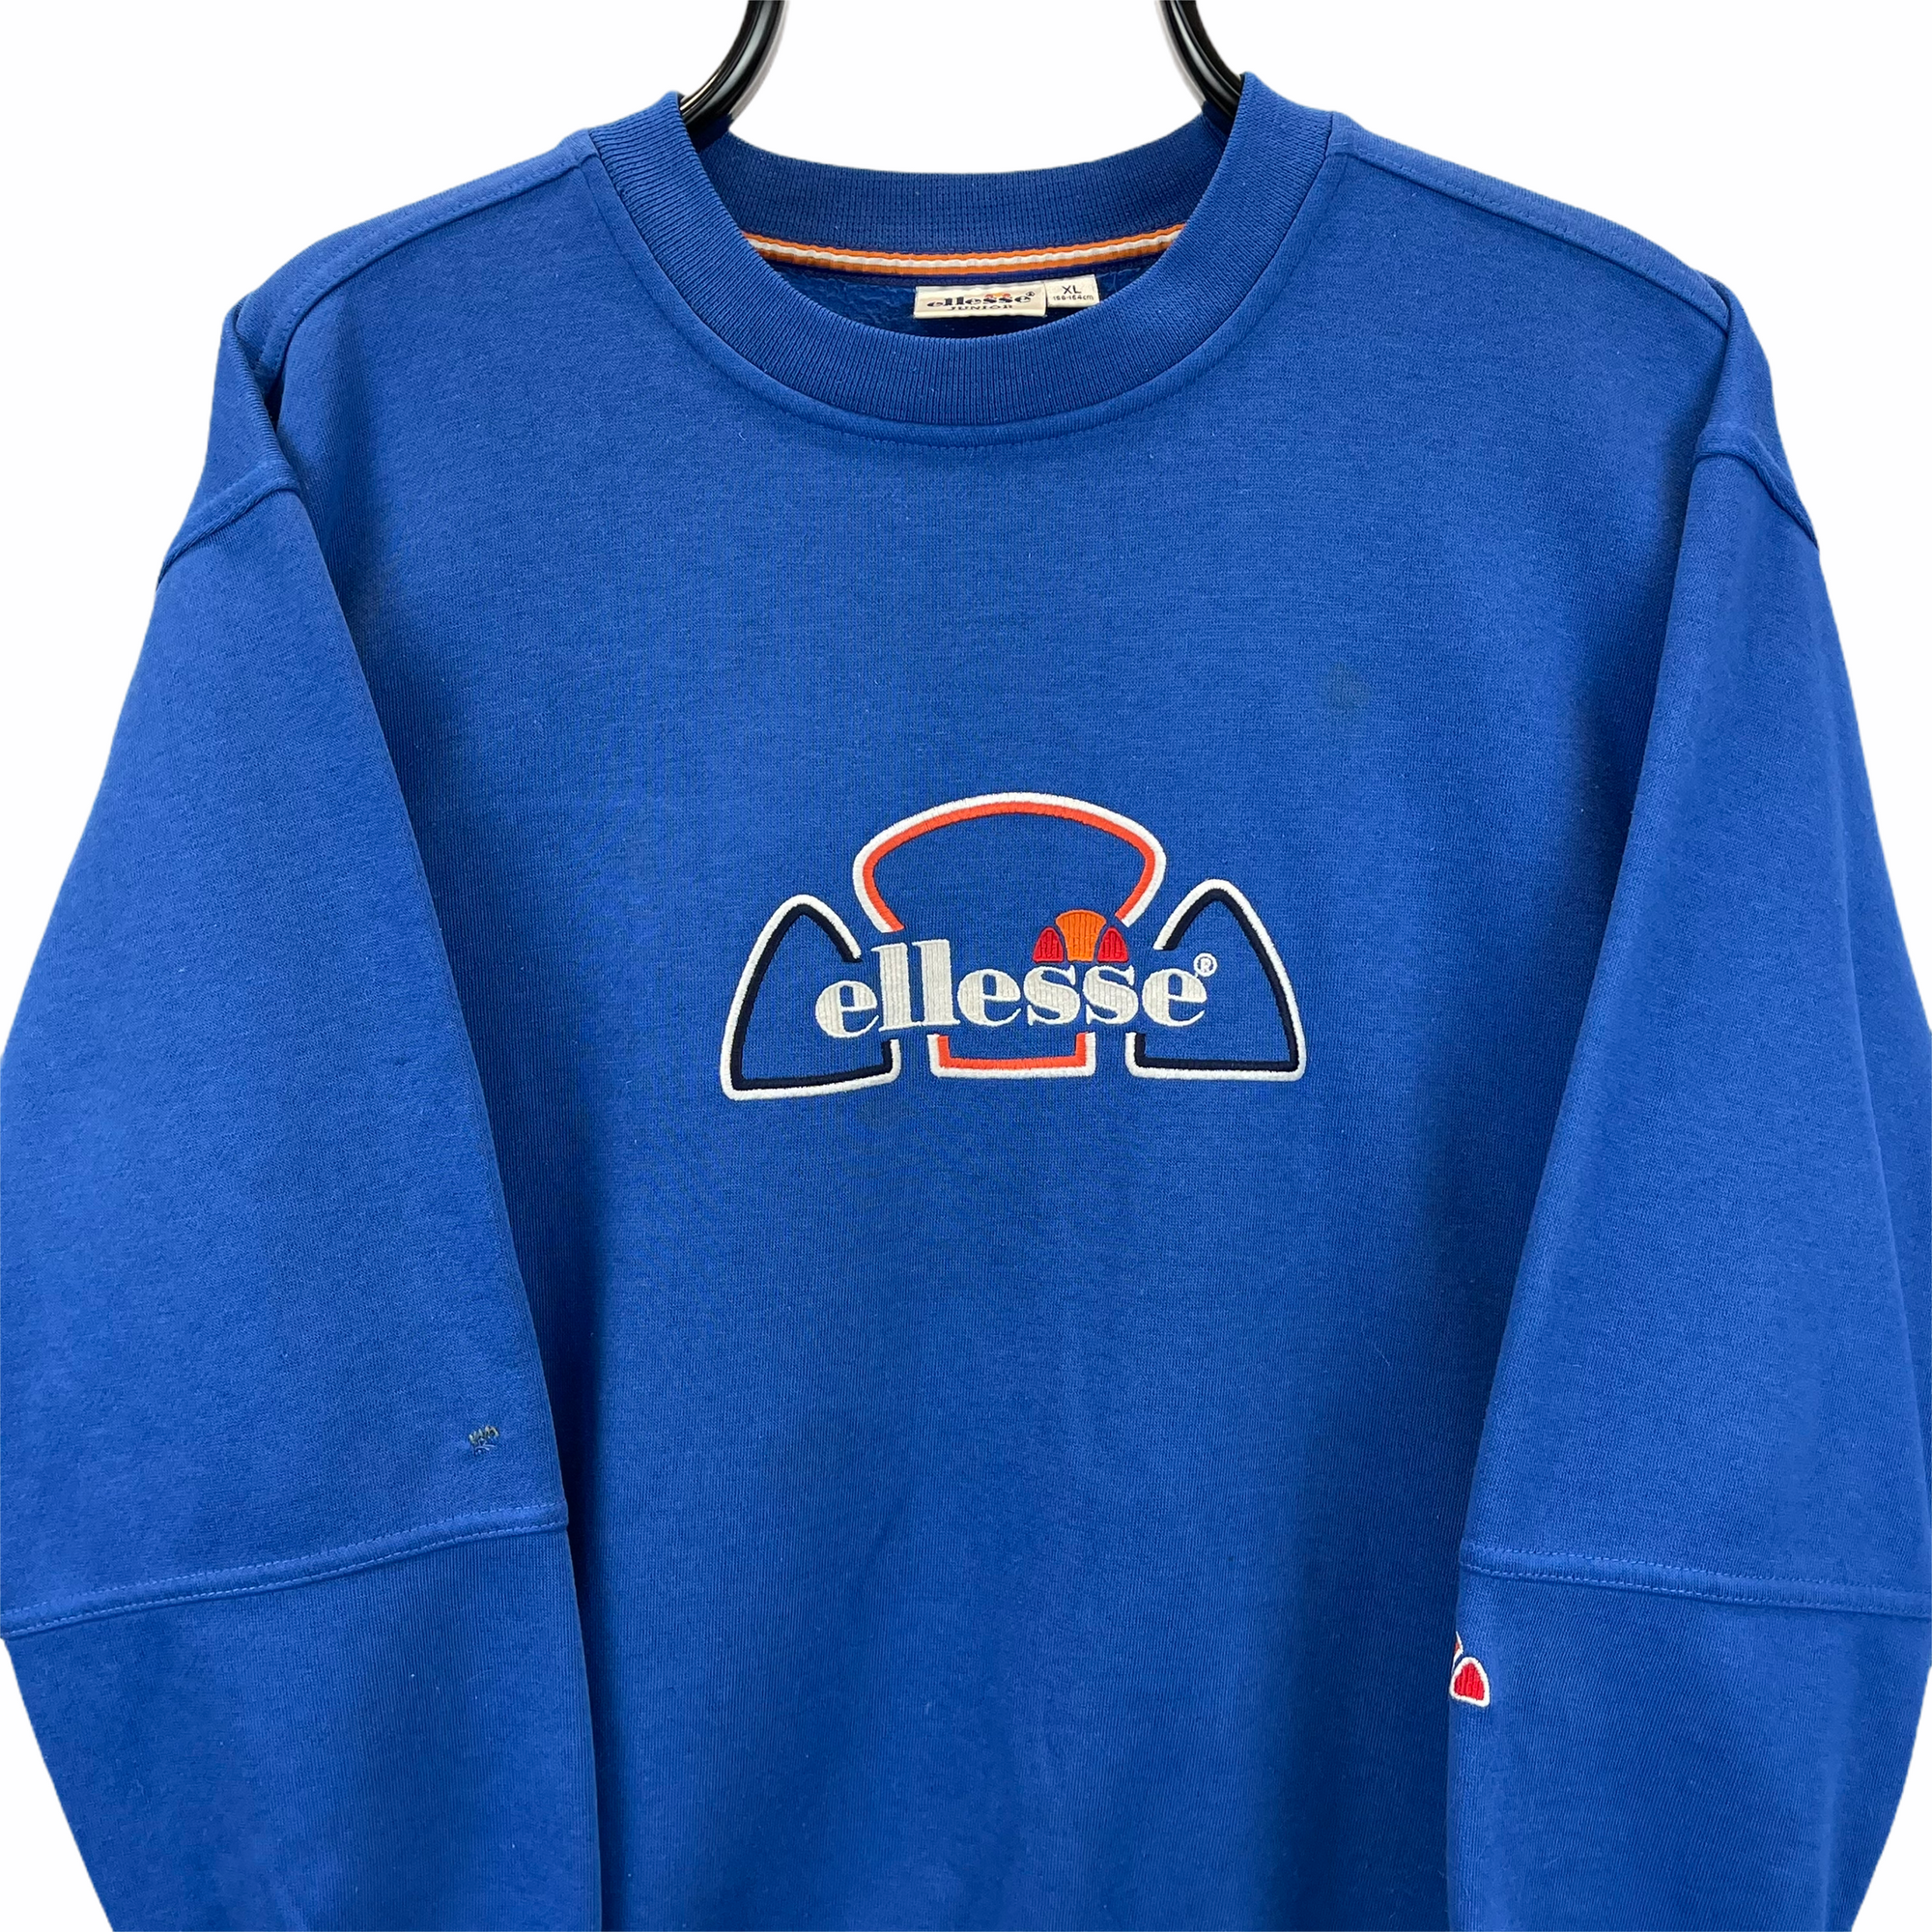 Vintage 90s Ellesse Sweatshirt in Blue - Men's Small/Women's Medium